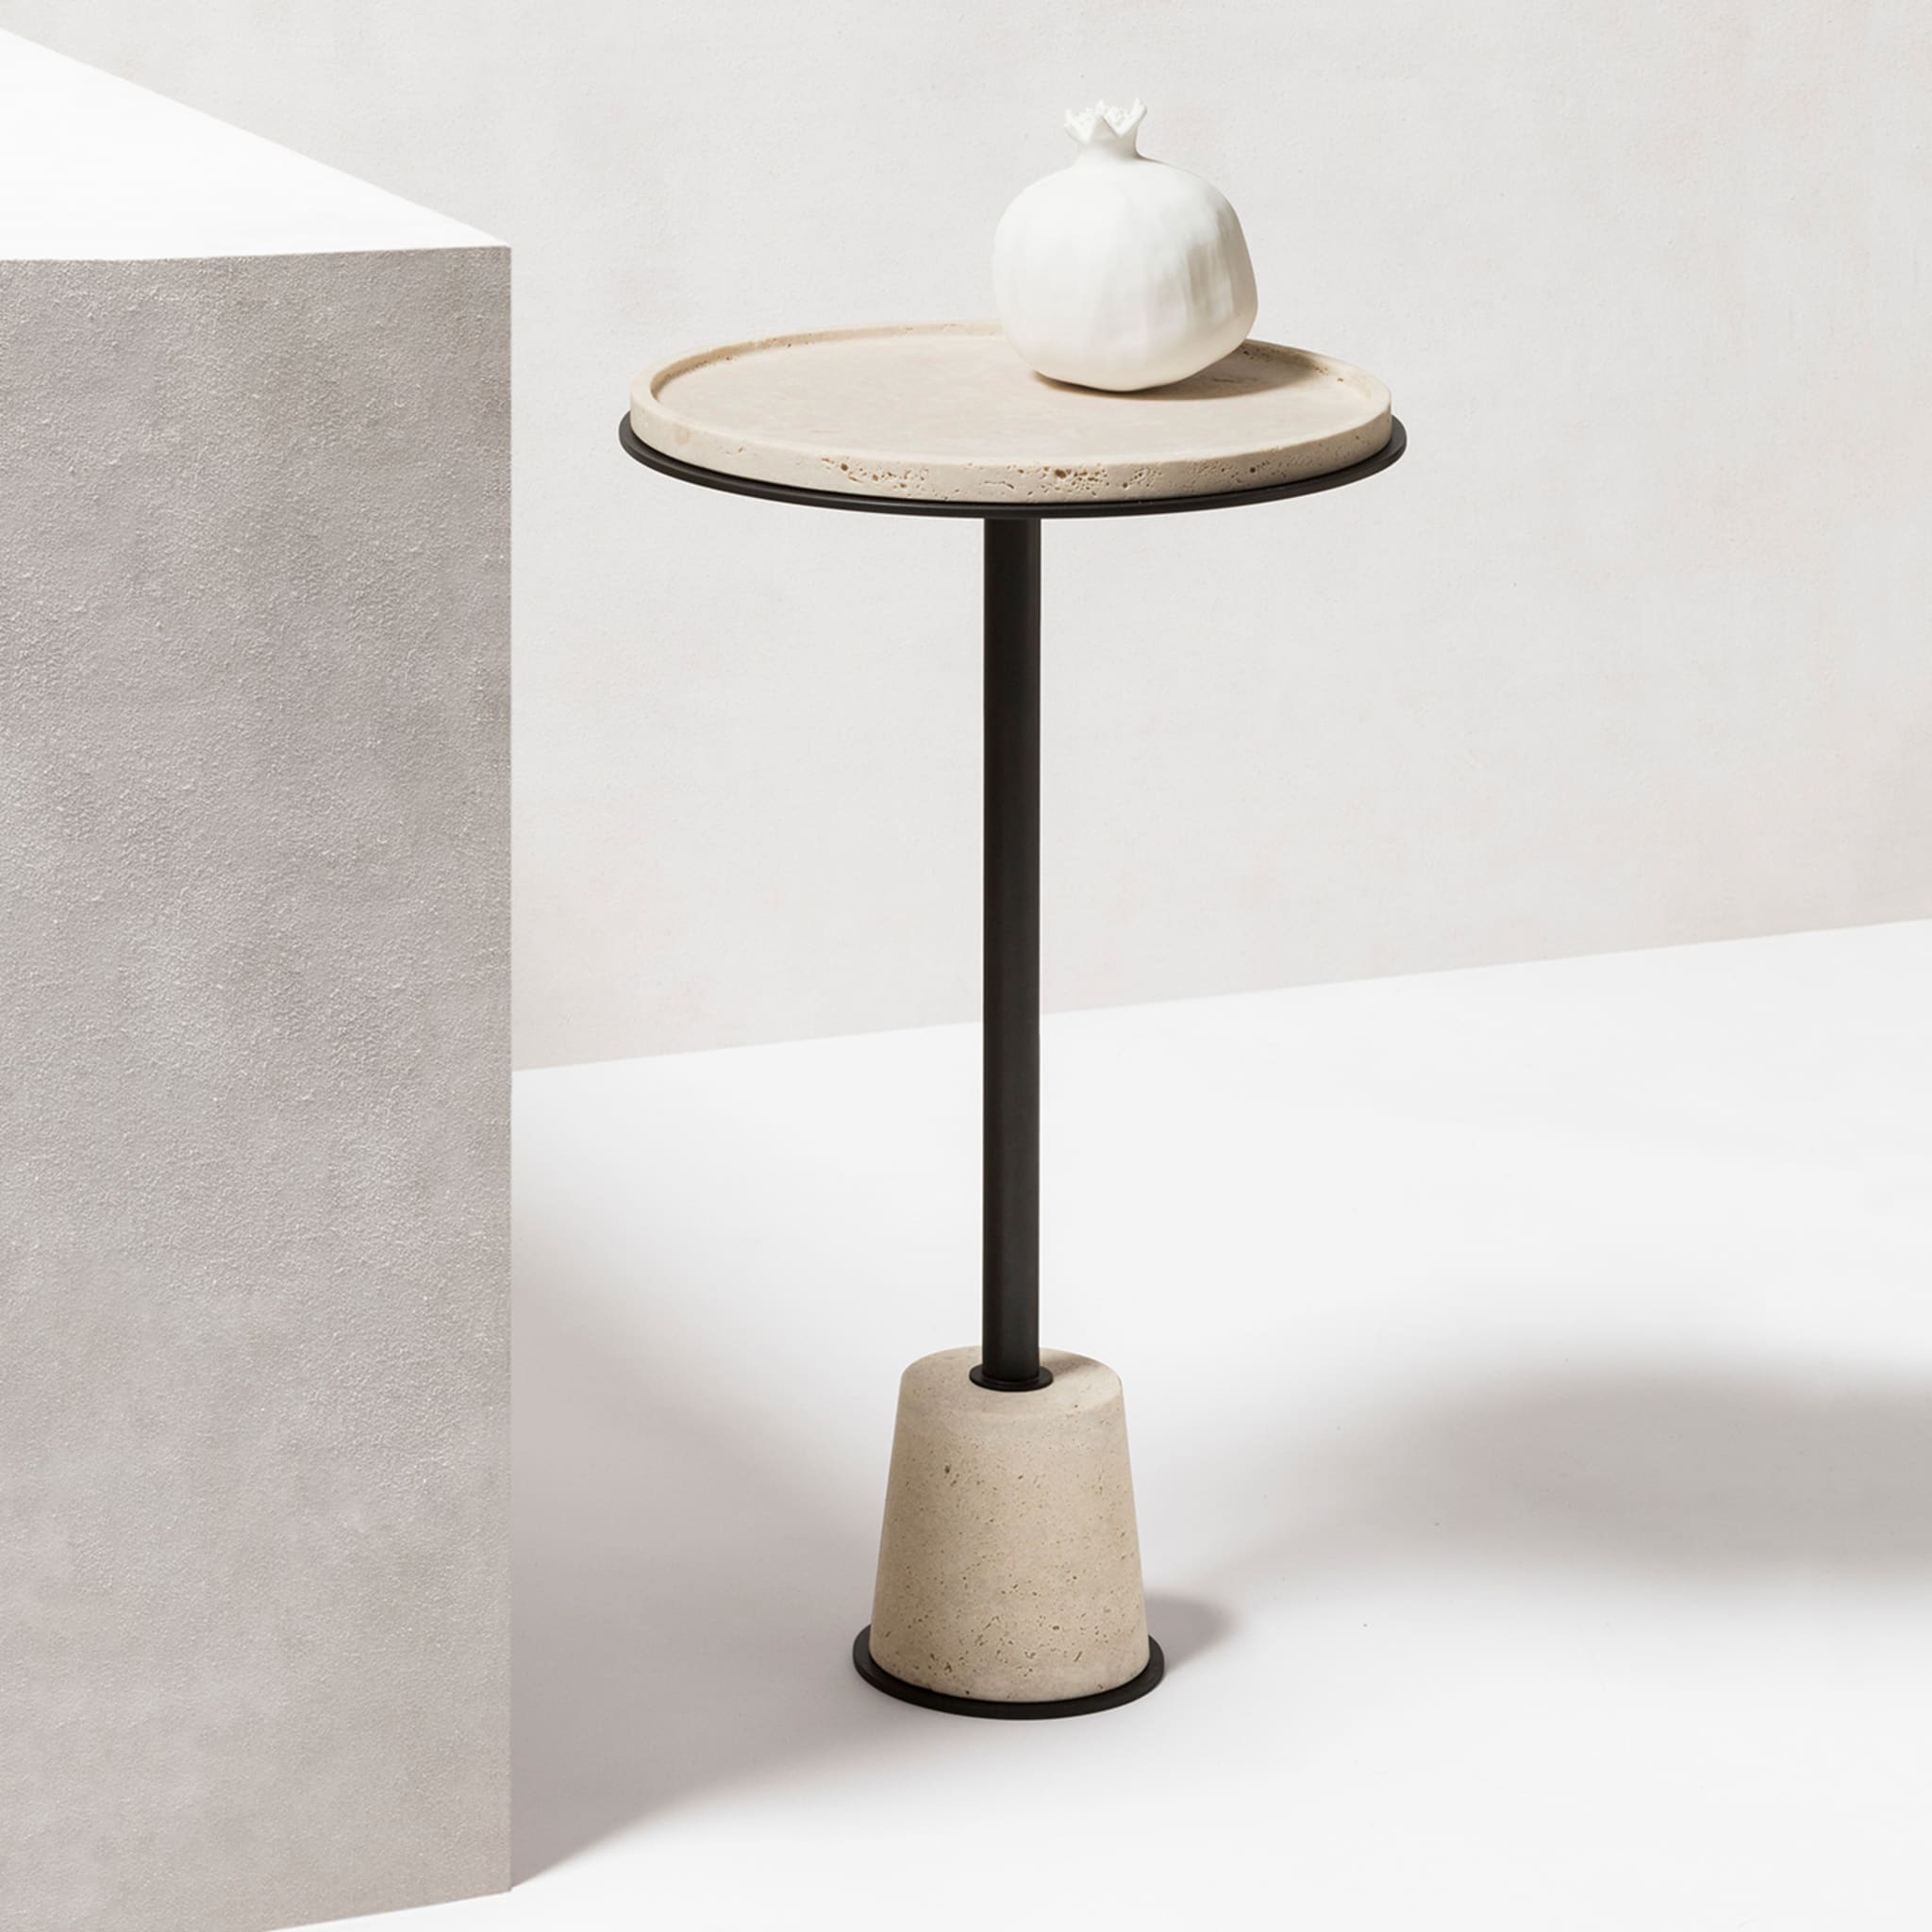 Sorrento Marble Side Table - Medium  - Alternative view 1